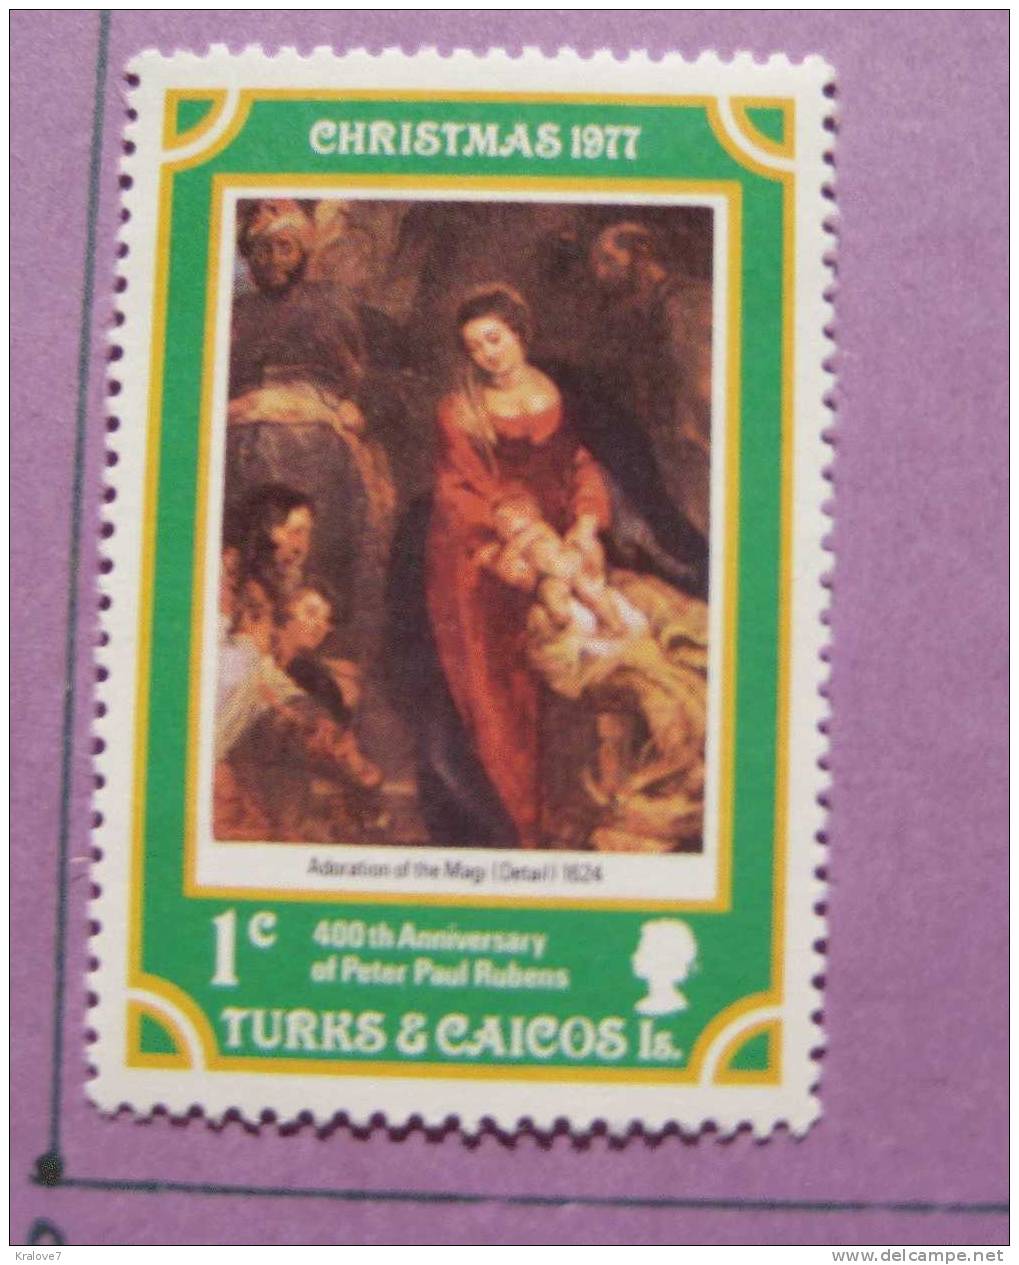 TURKS CAICOS. 2 TIMBRES. NEUF. NOEL HUMAN RIGHTS. RELIGION 1977-1968 CHRISTMAS RELIGIONS NAVIDAD - Turks And Caicos